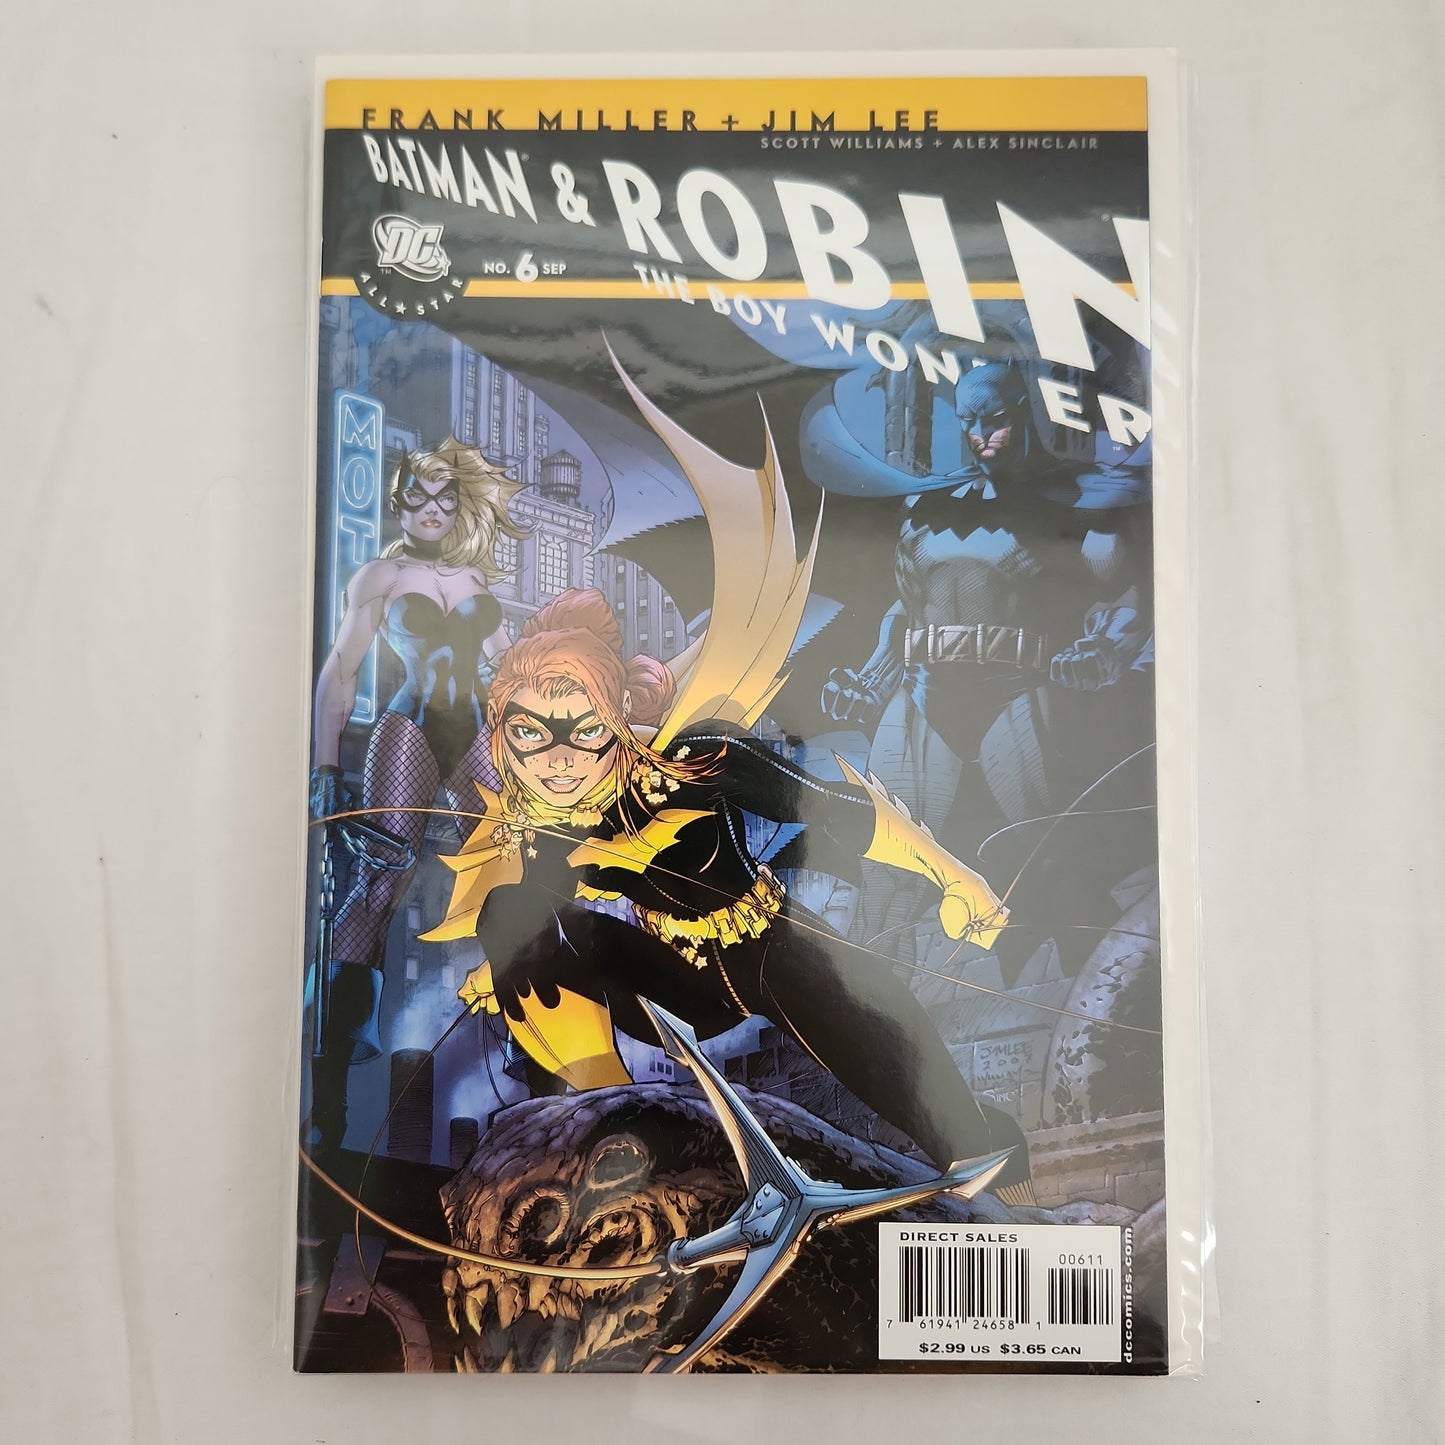 Batman & Robin All Star Series Comic Books 1-9 - Mint Condition